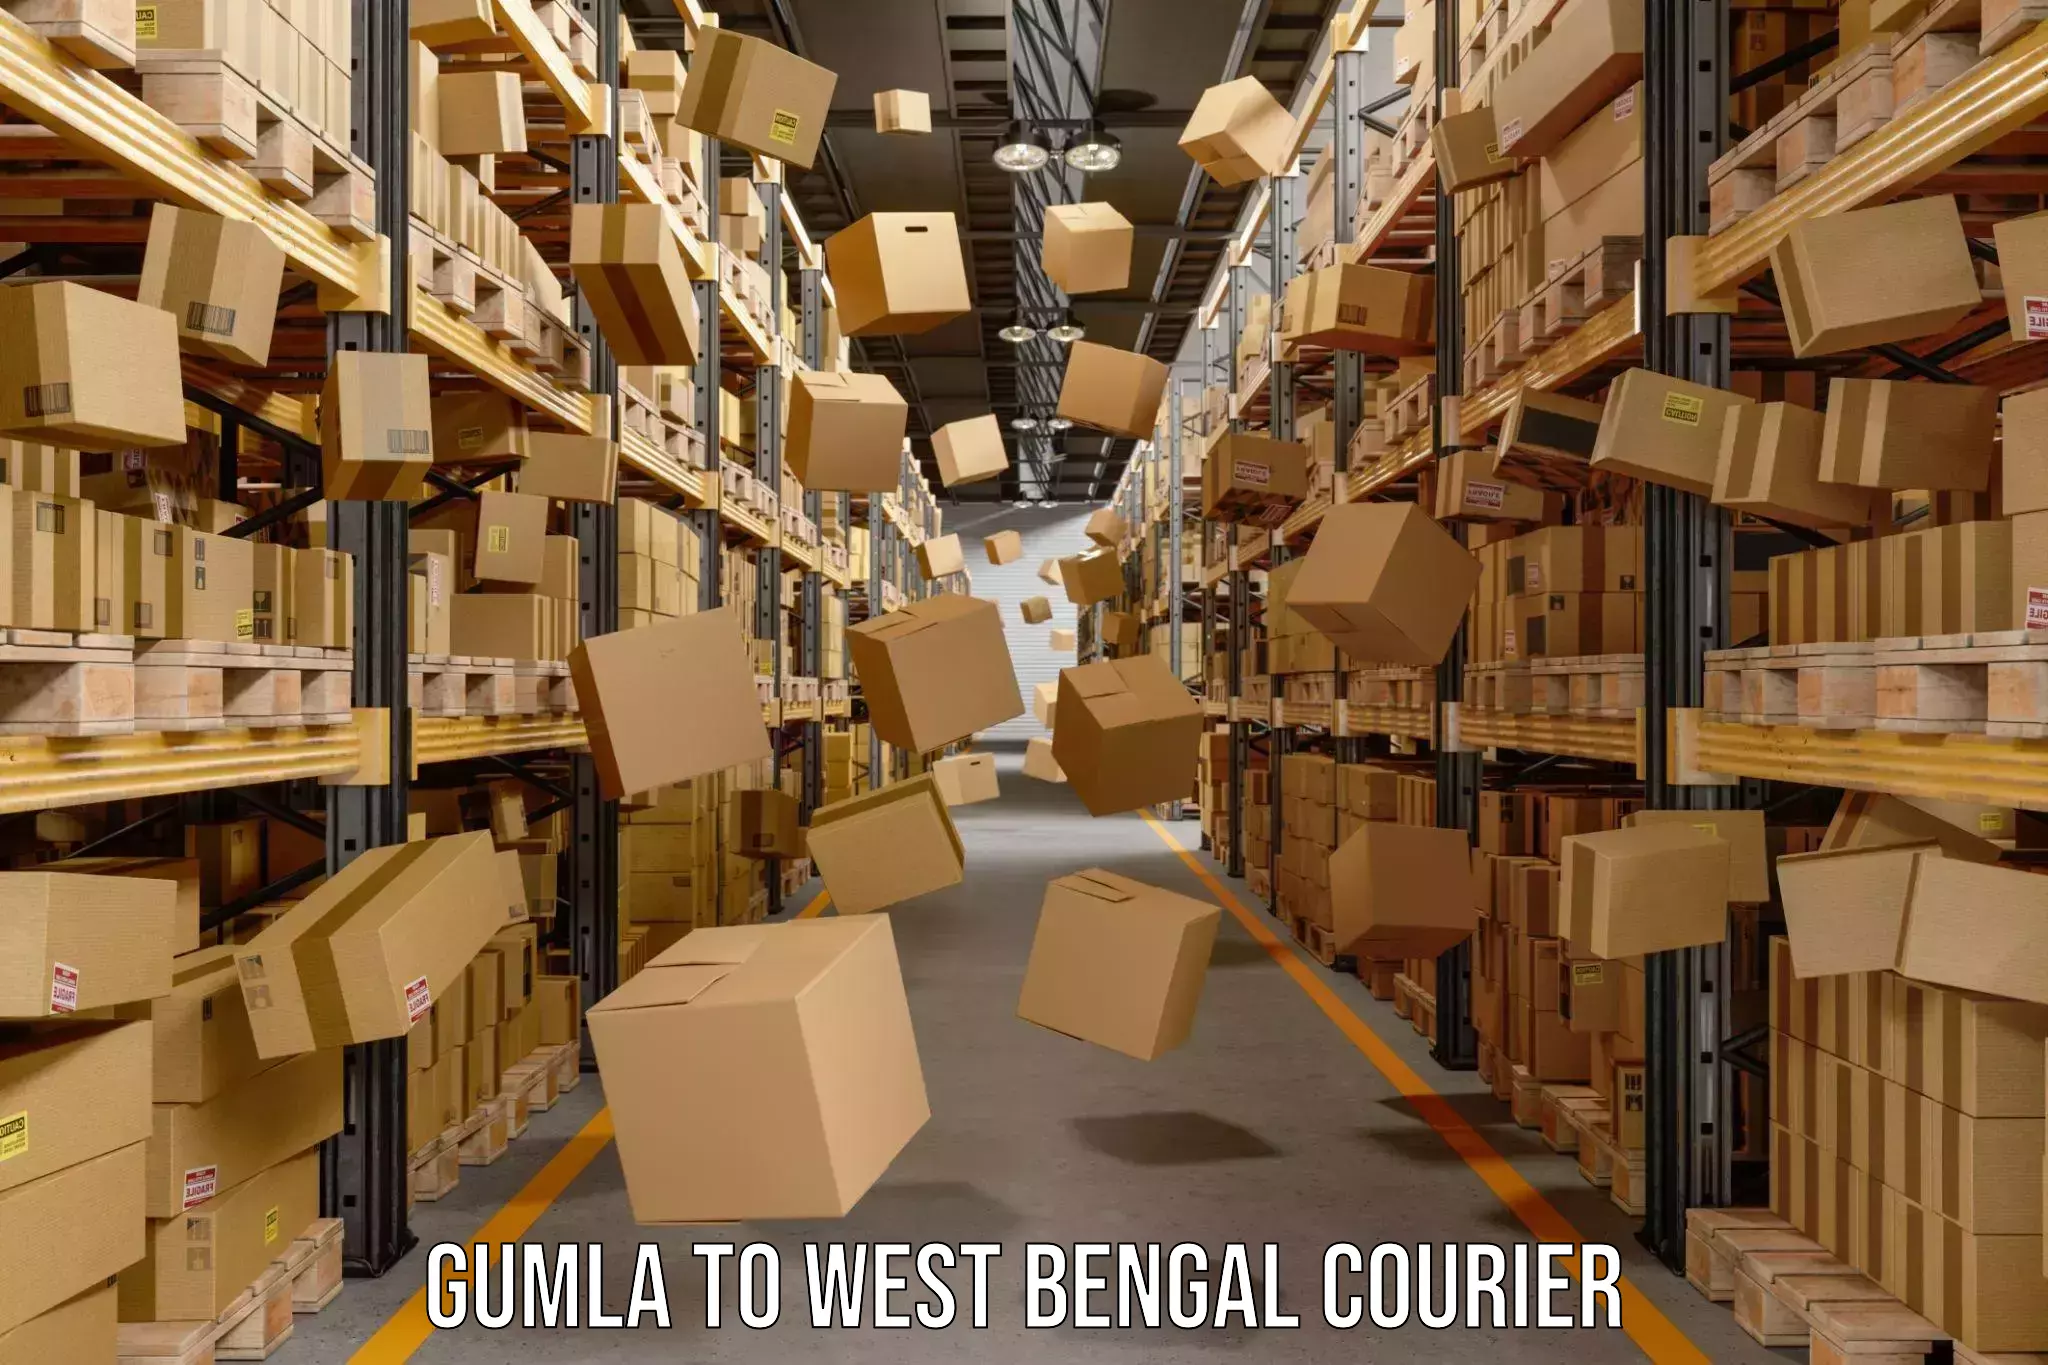 Courier service comparison Gumla to Haldia port